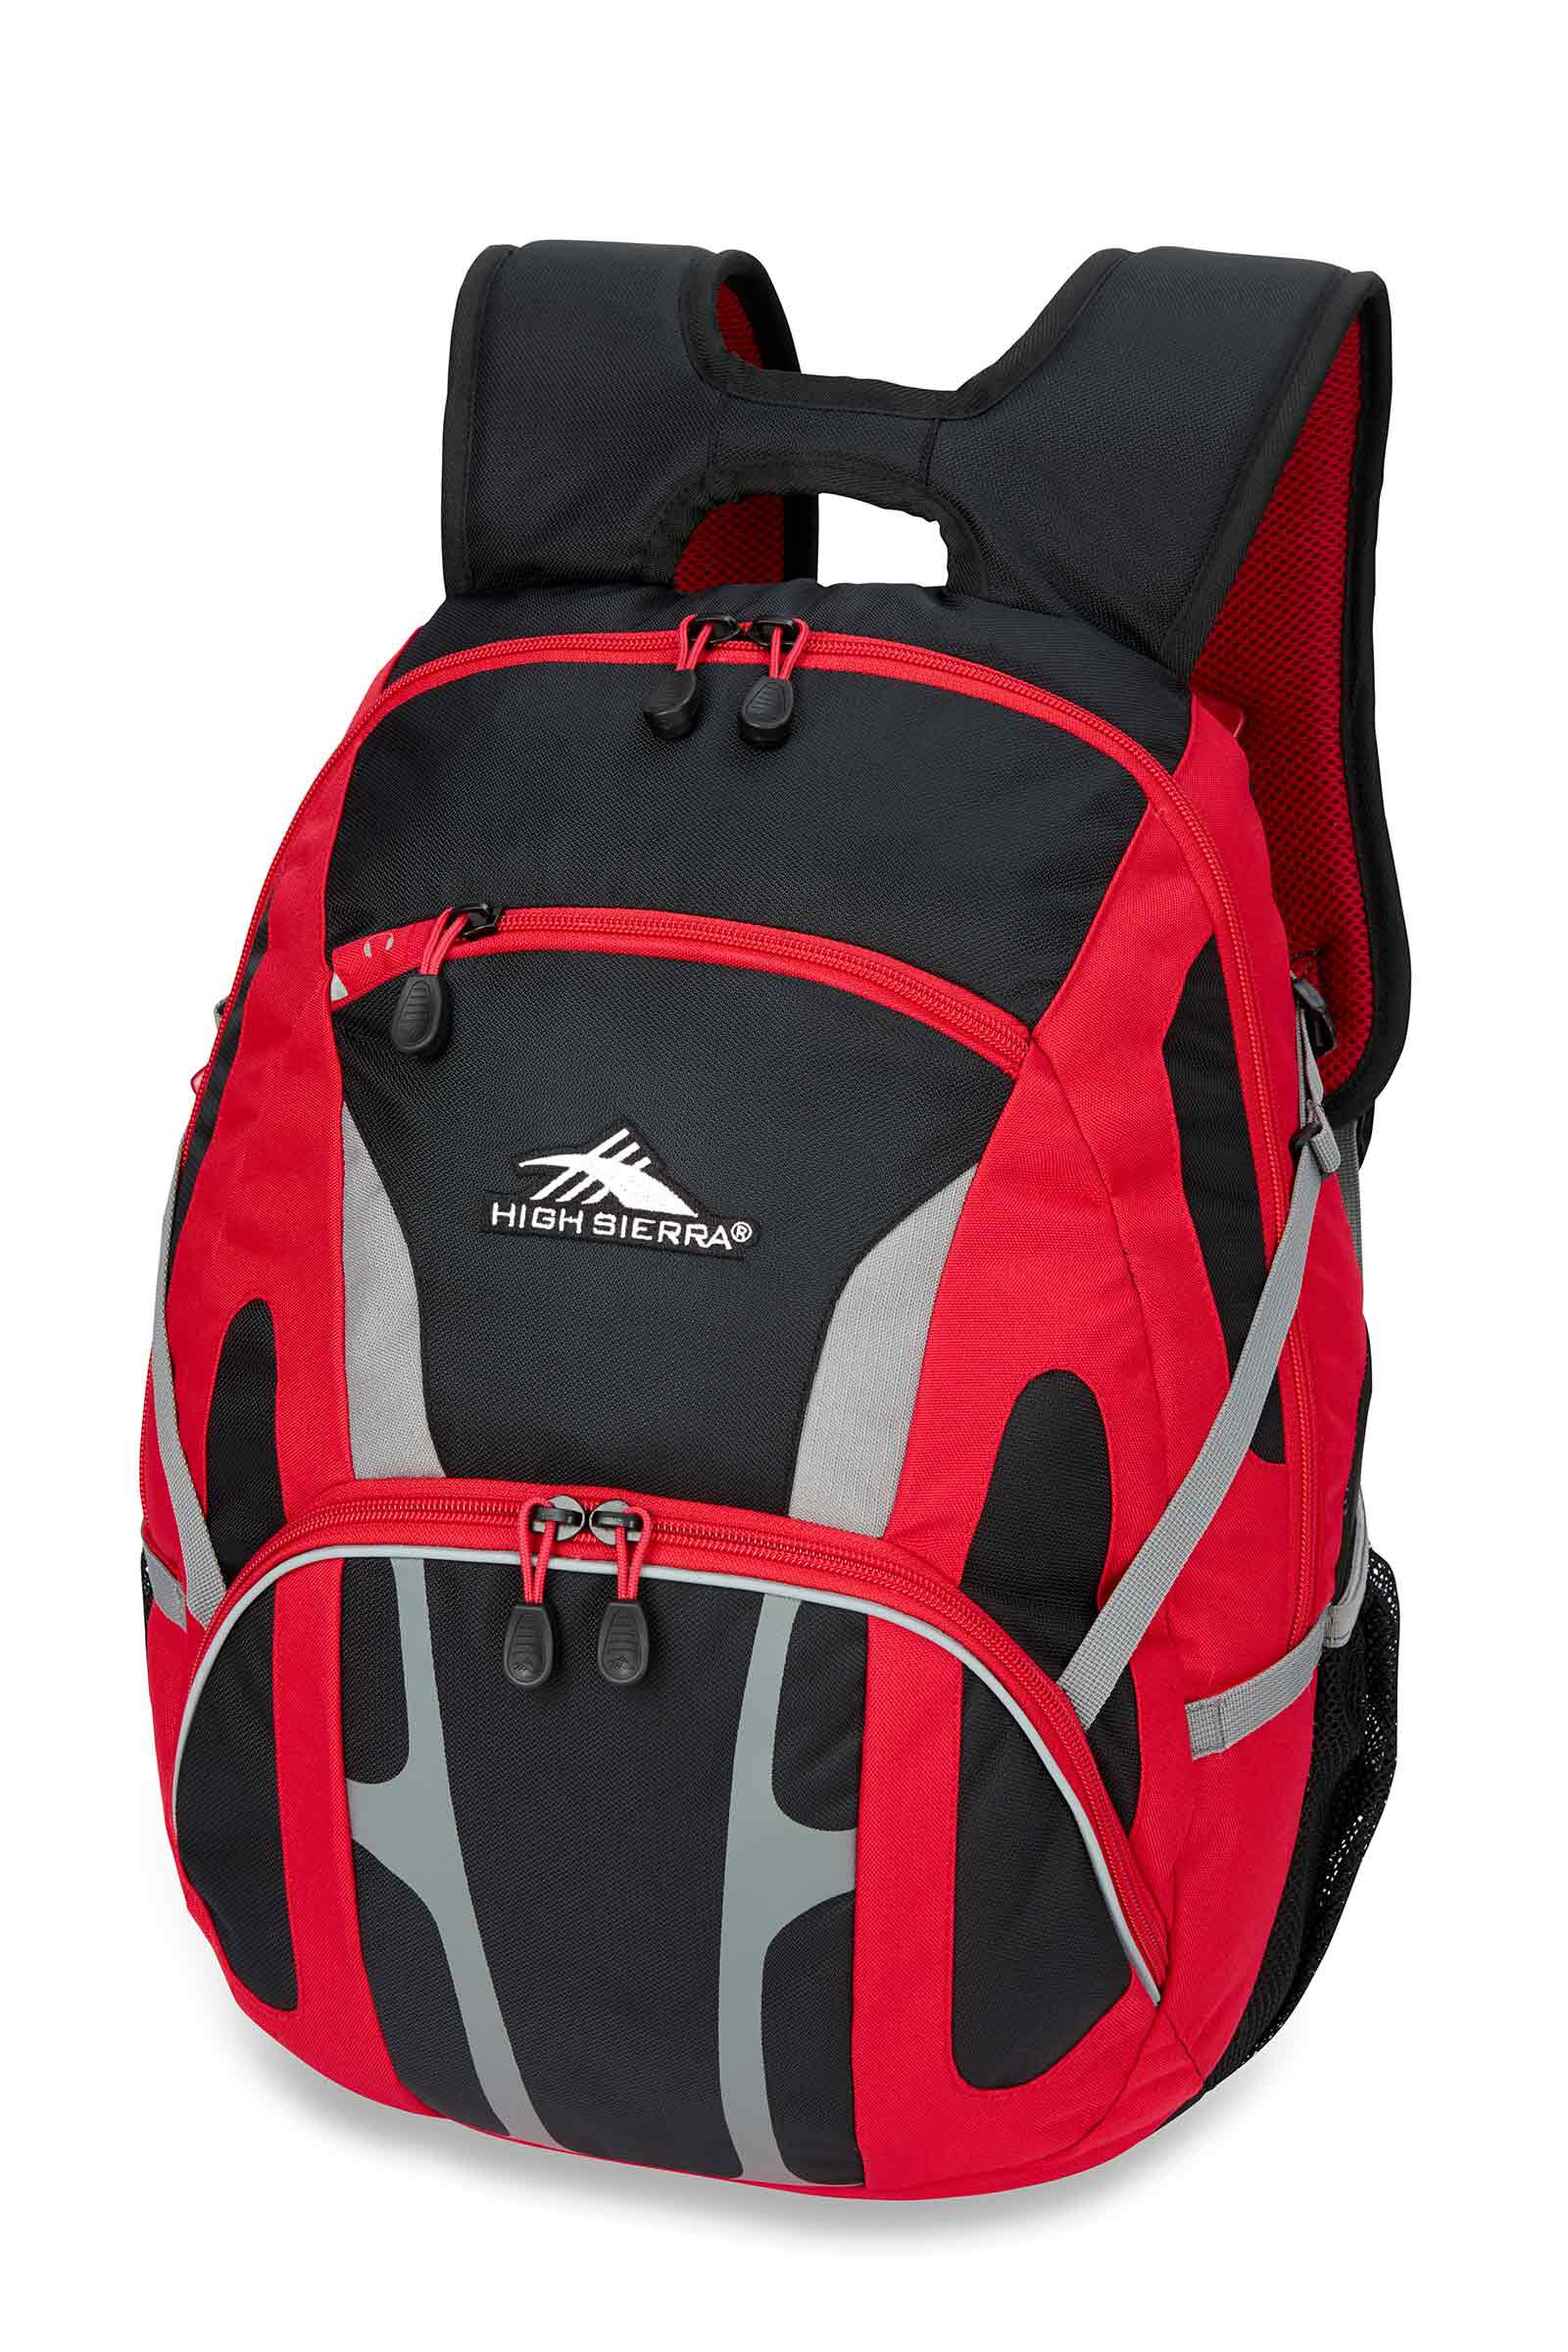 NEW High Sierra Mini Backpack Daypack Pocket Black Bag Outdoor Camping Bags 